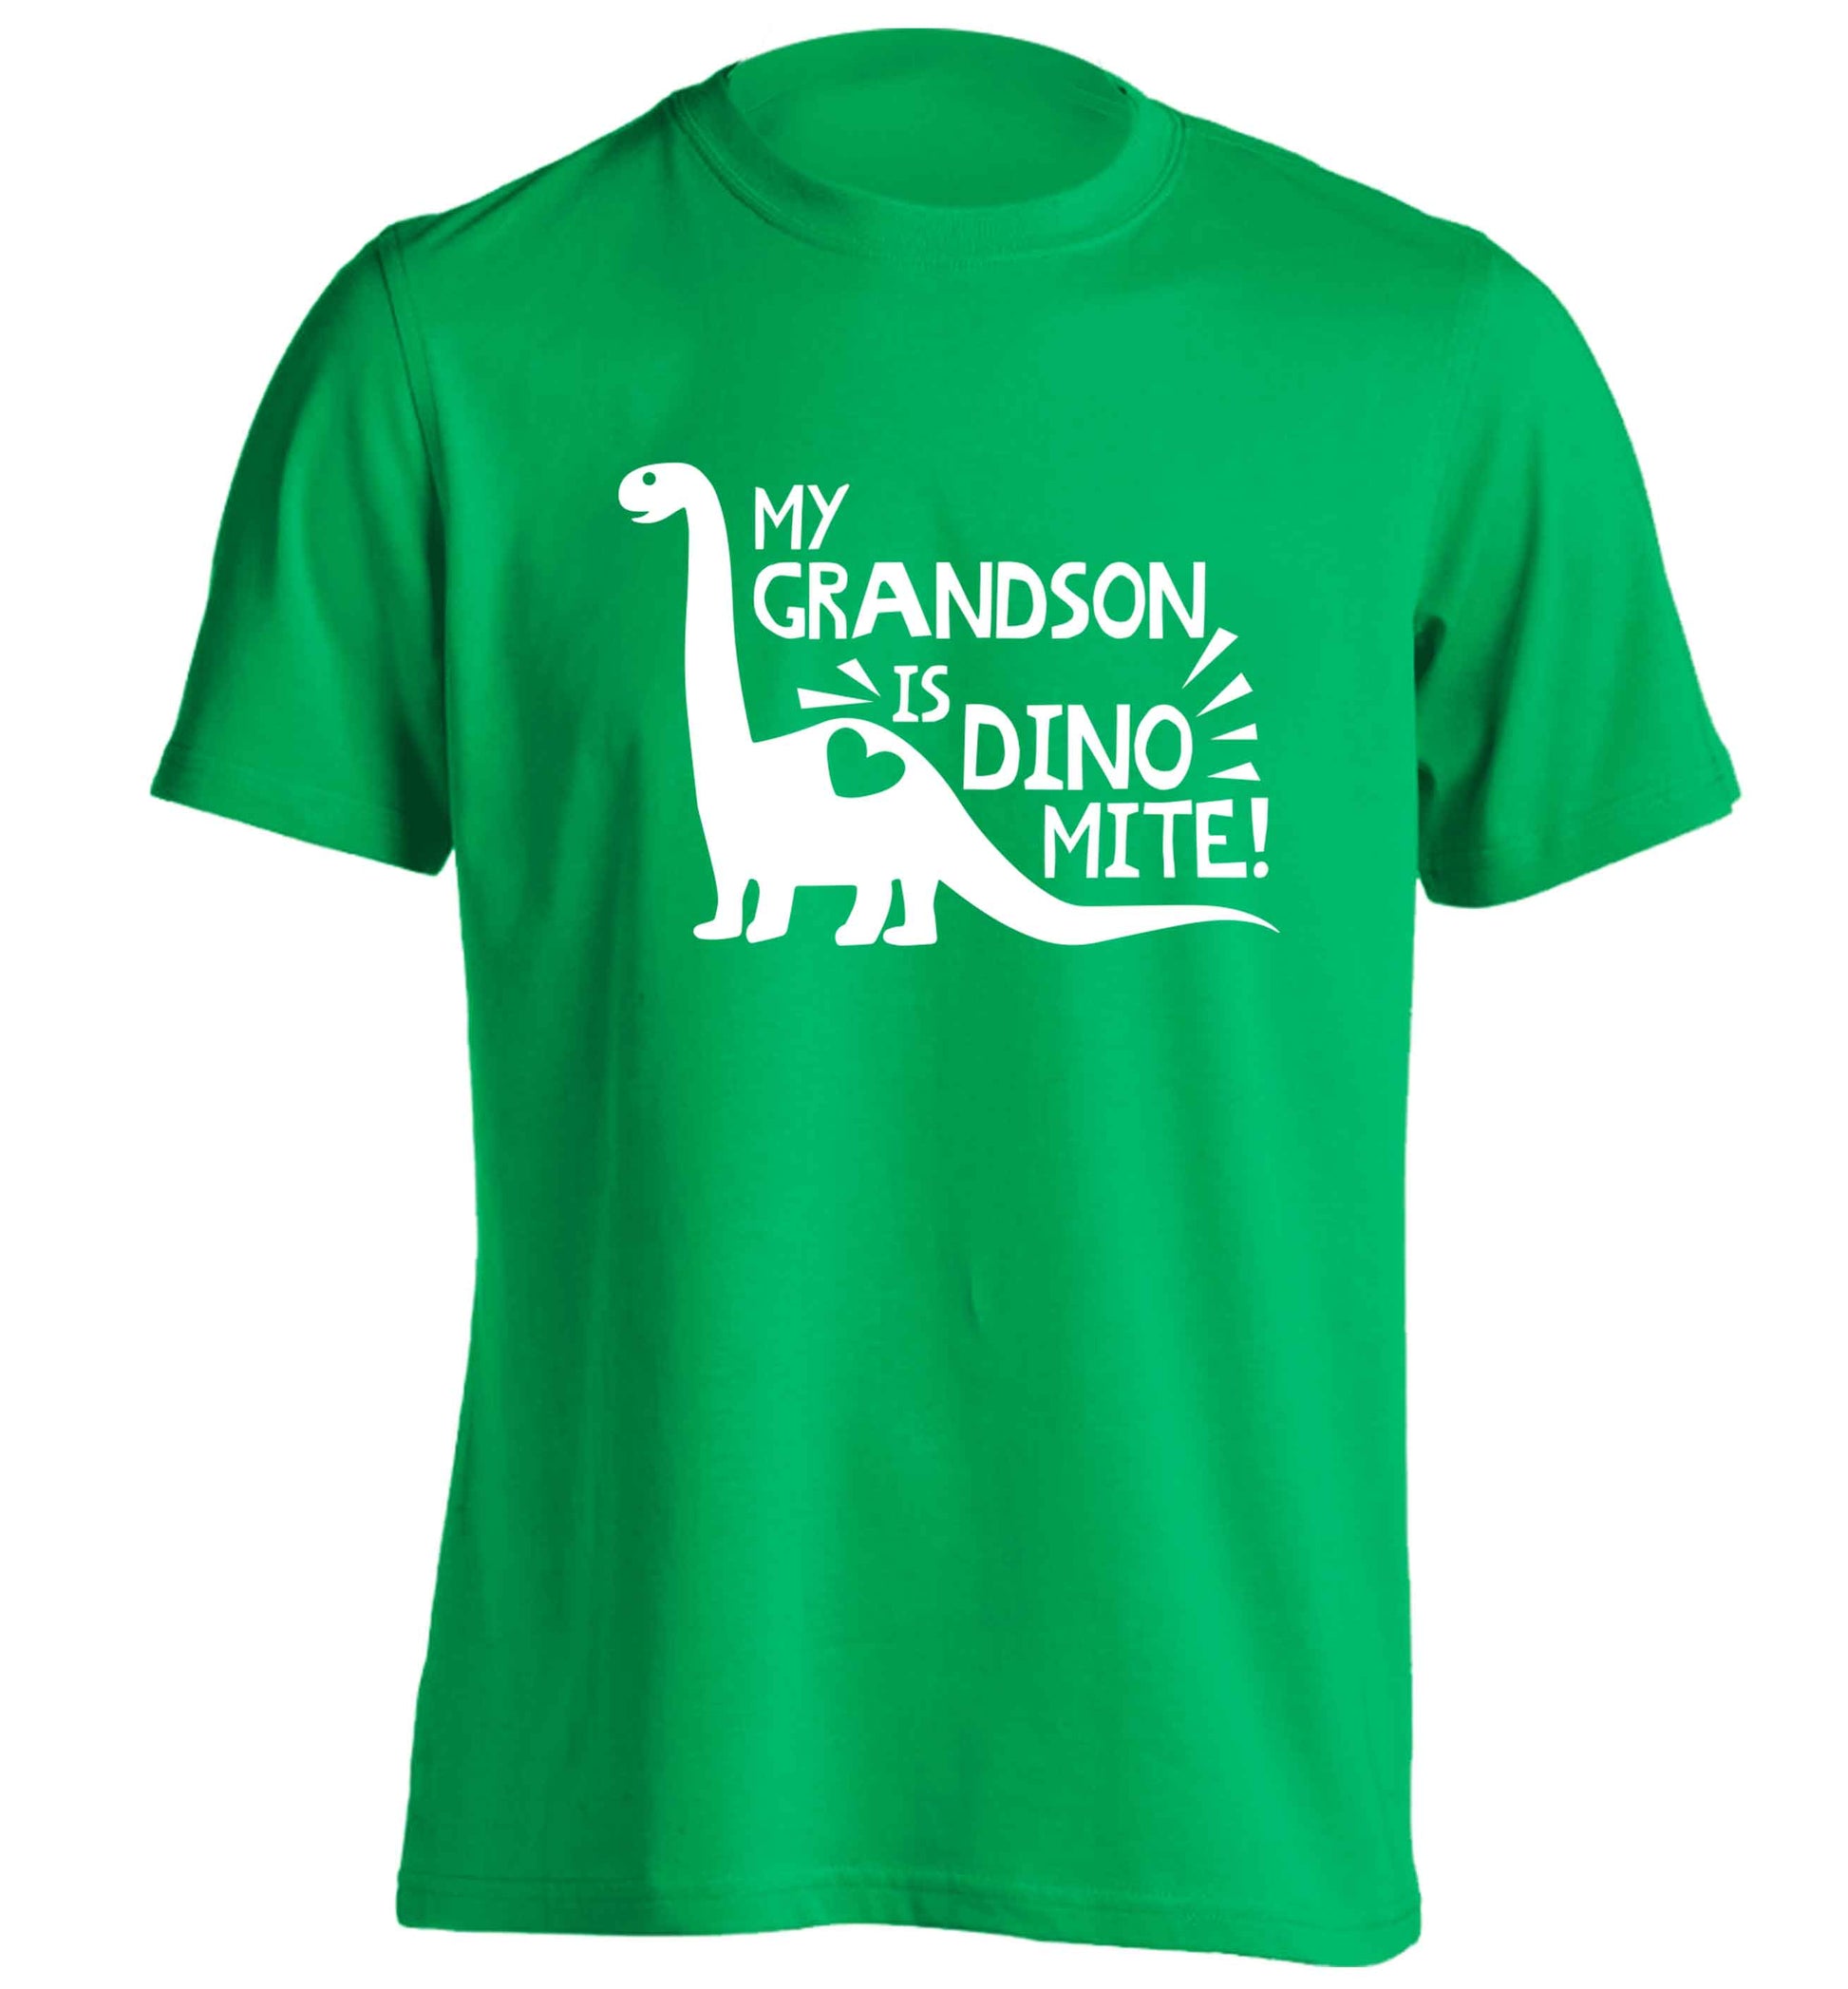 My grandson is dinomite! adults unisex green Tshirt 2XL